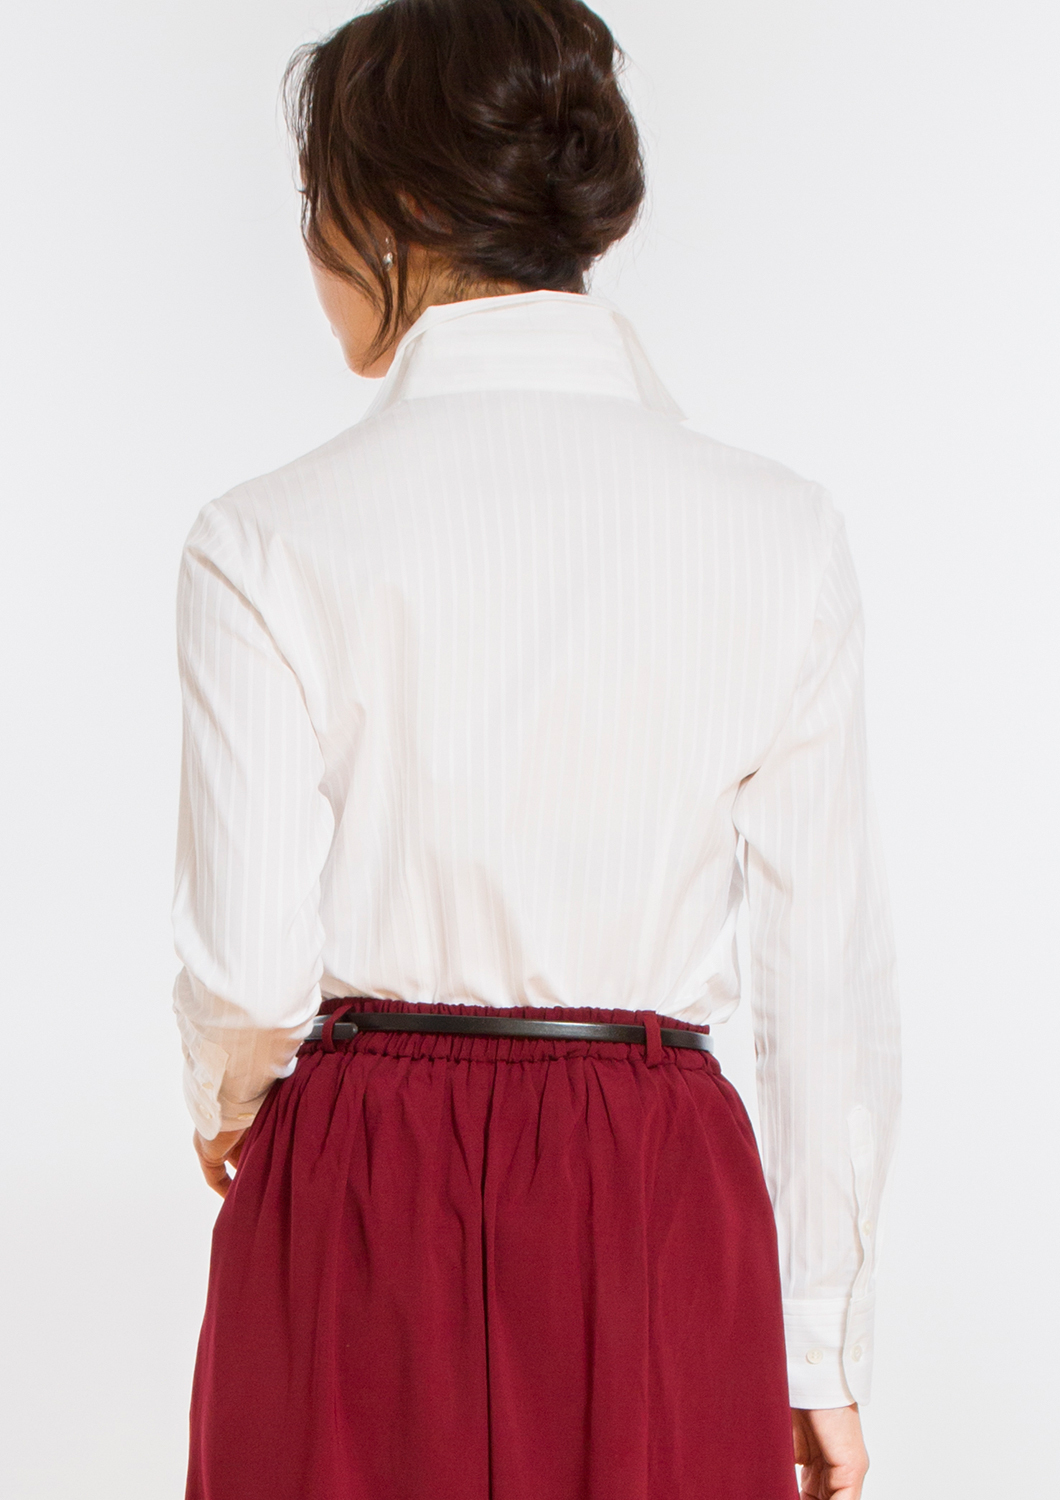 (Premium) Stretch Easy Care Shirt/ Cutaway/ Long Sleeve/ Stripe White